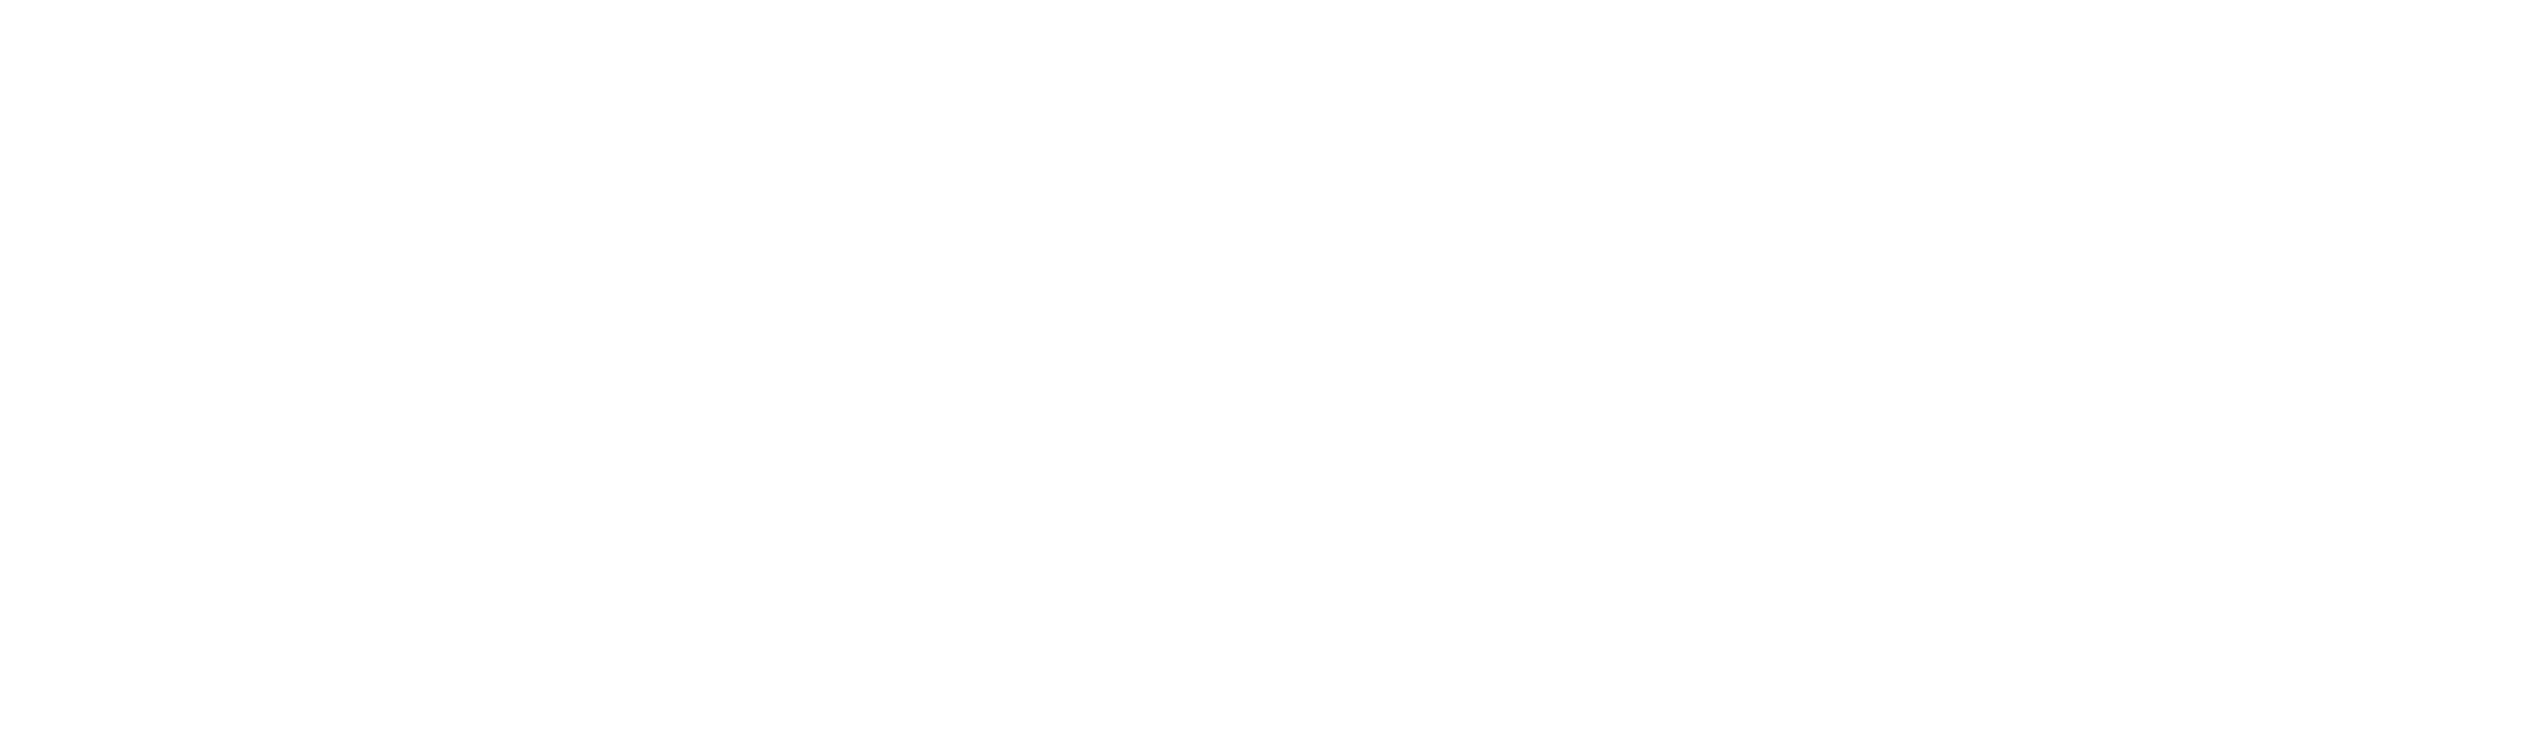 Director by Night logo